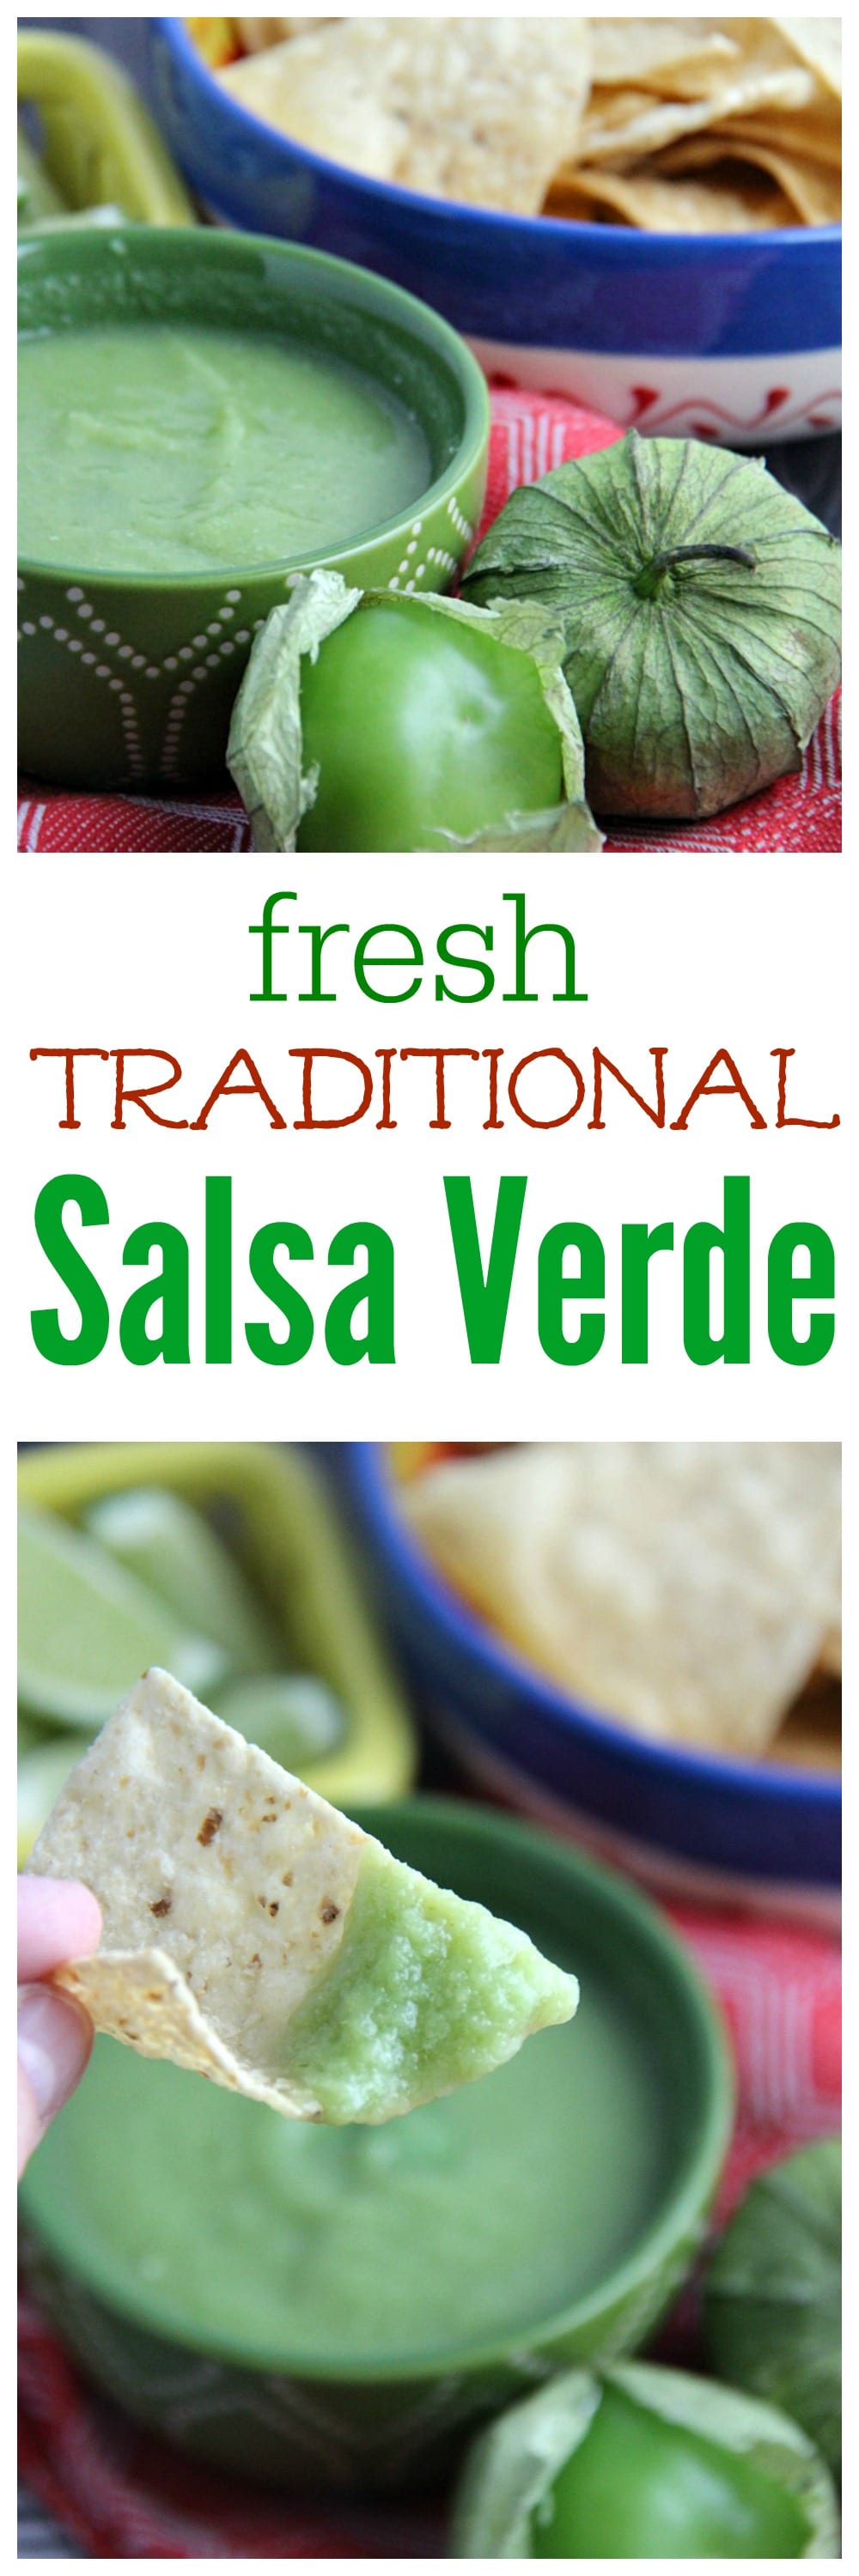 Fresh traditional Salsa Verde Recipe